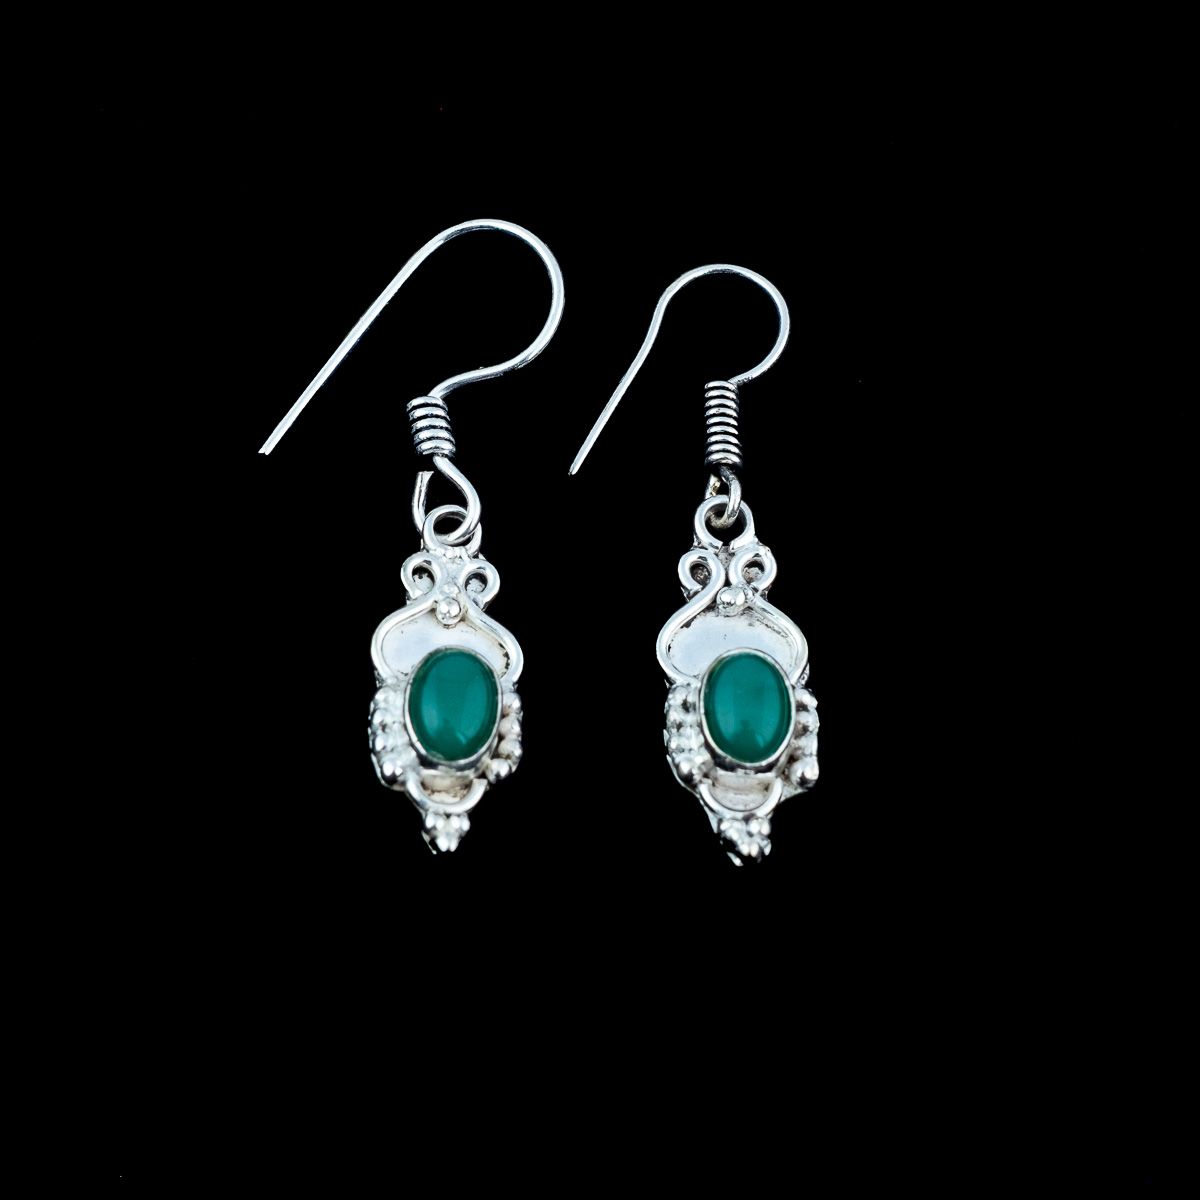 German silver earrings Putrim - Chrysoprase India